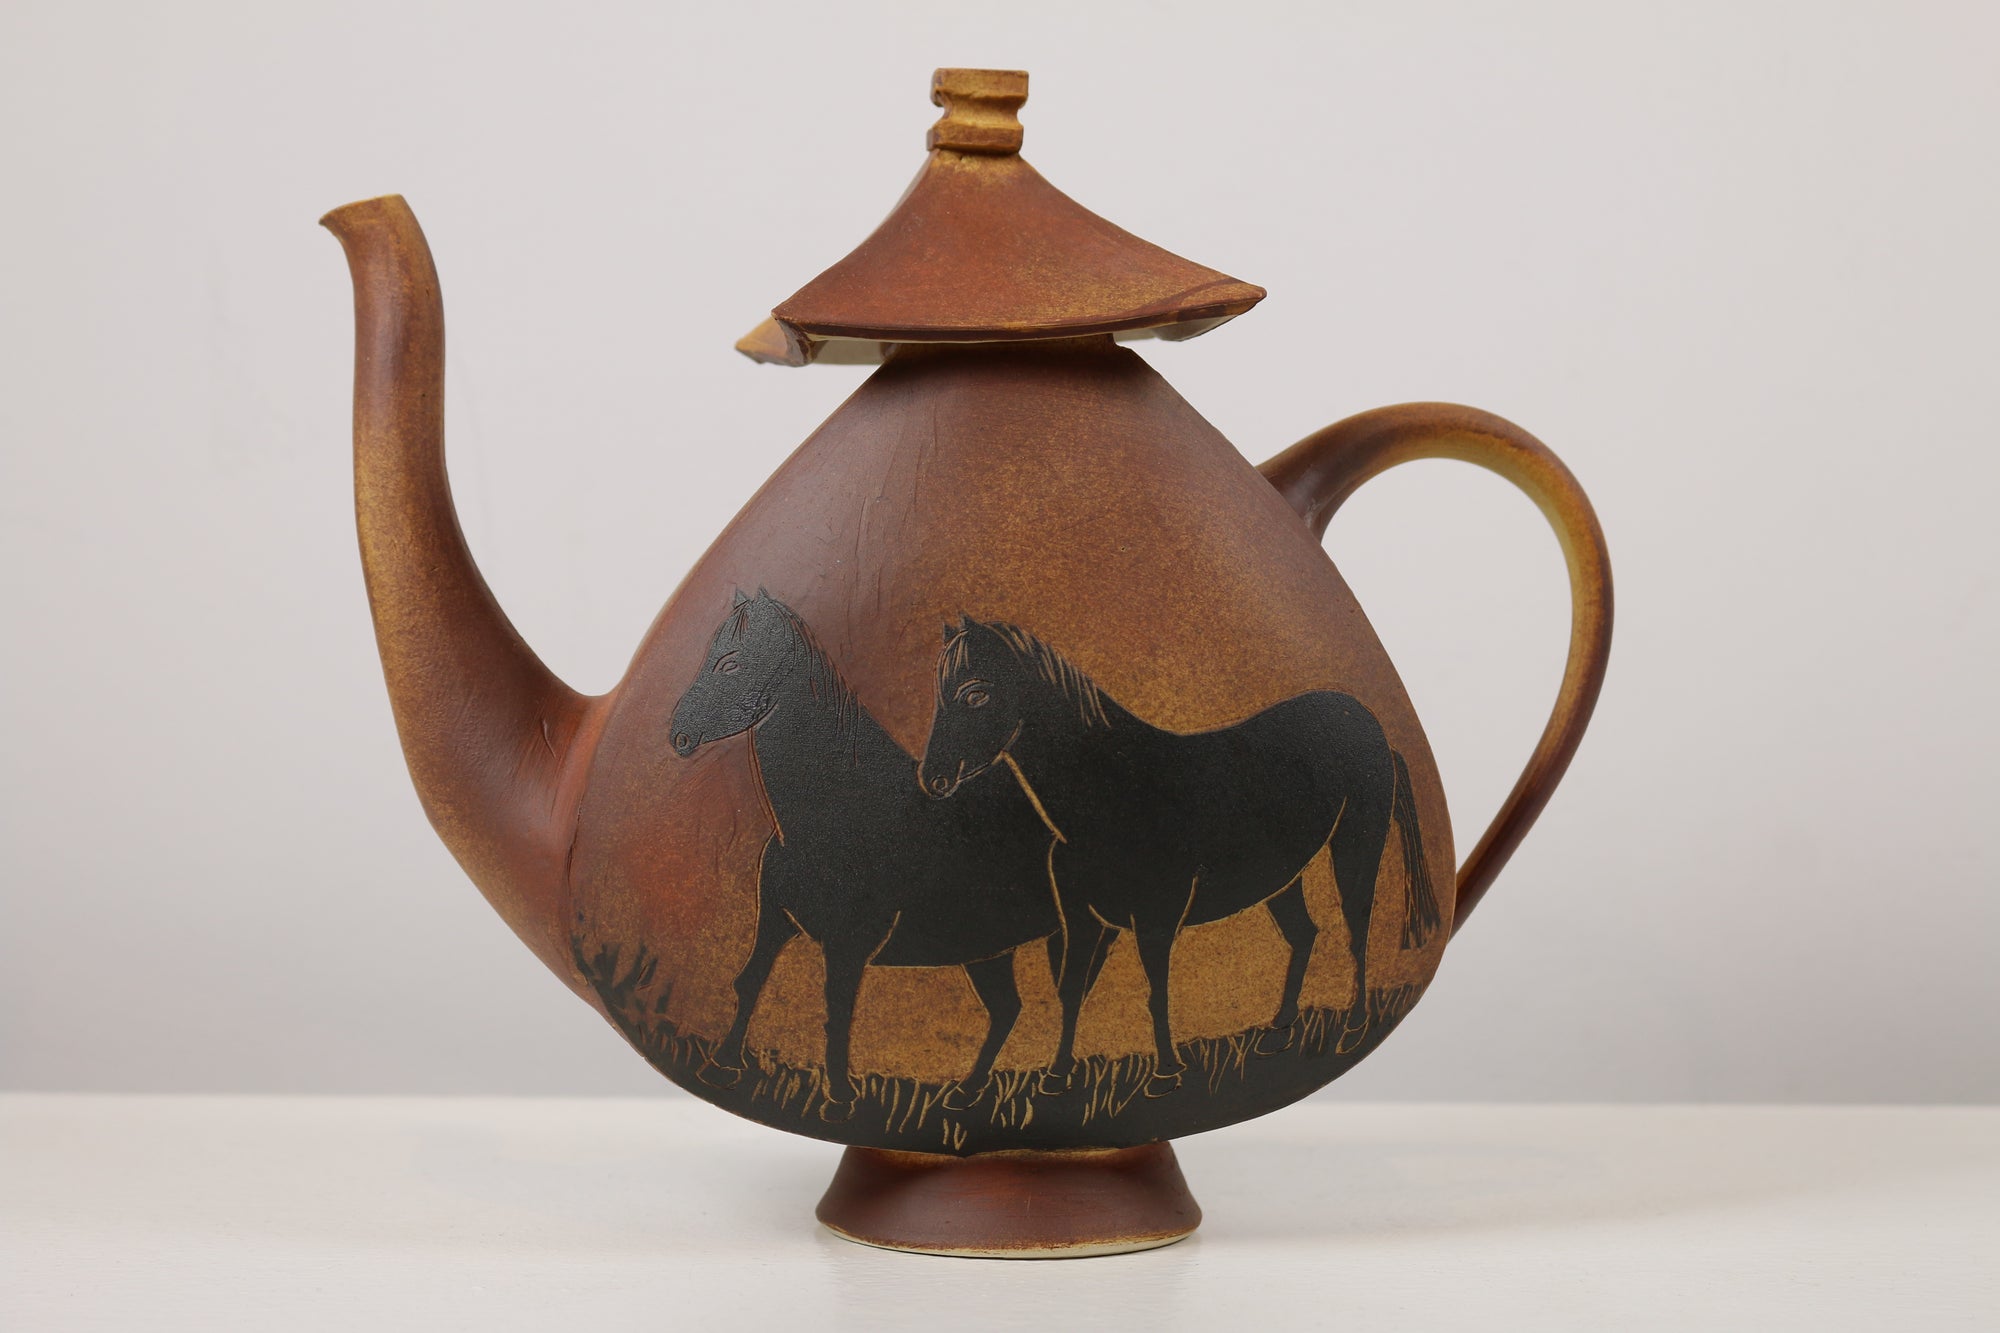 Ceramic Tea Pot with Decorative Horses